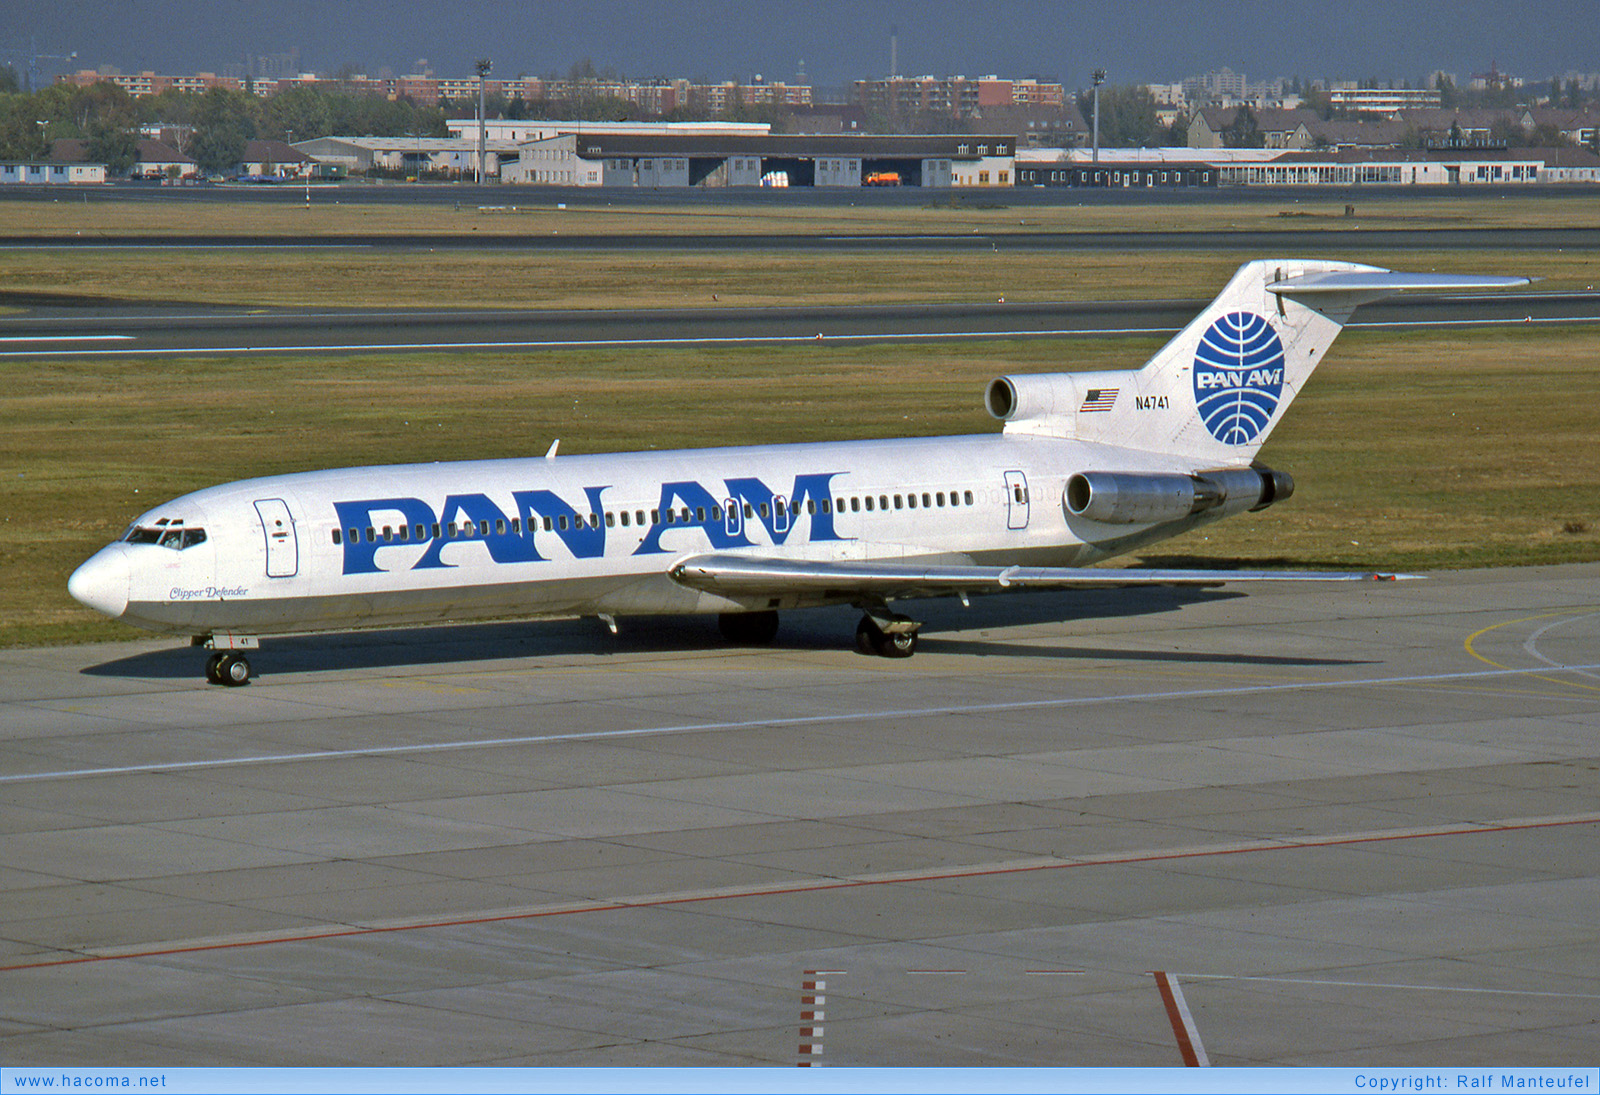 Photo of N4741 - Pan Am Clipper Defender - Berlin-Tegel Airport - Oct 24, 1990